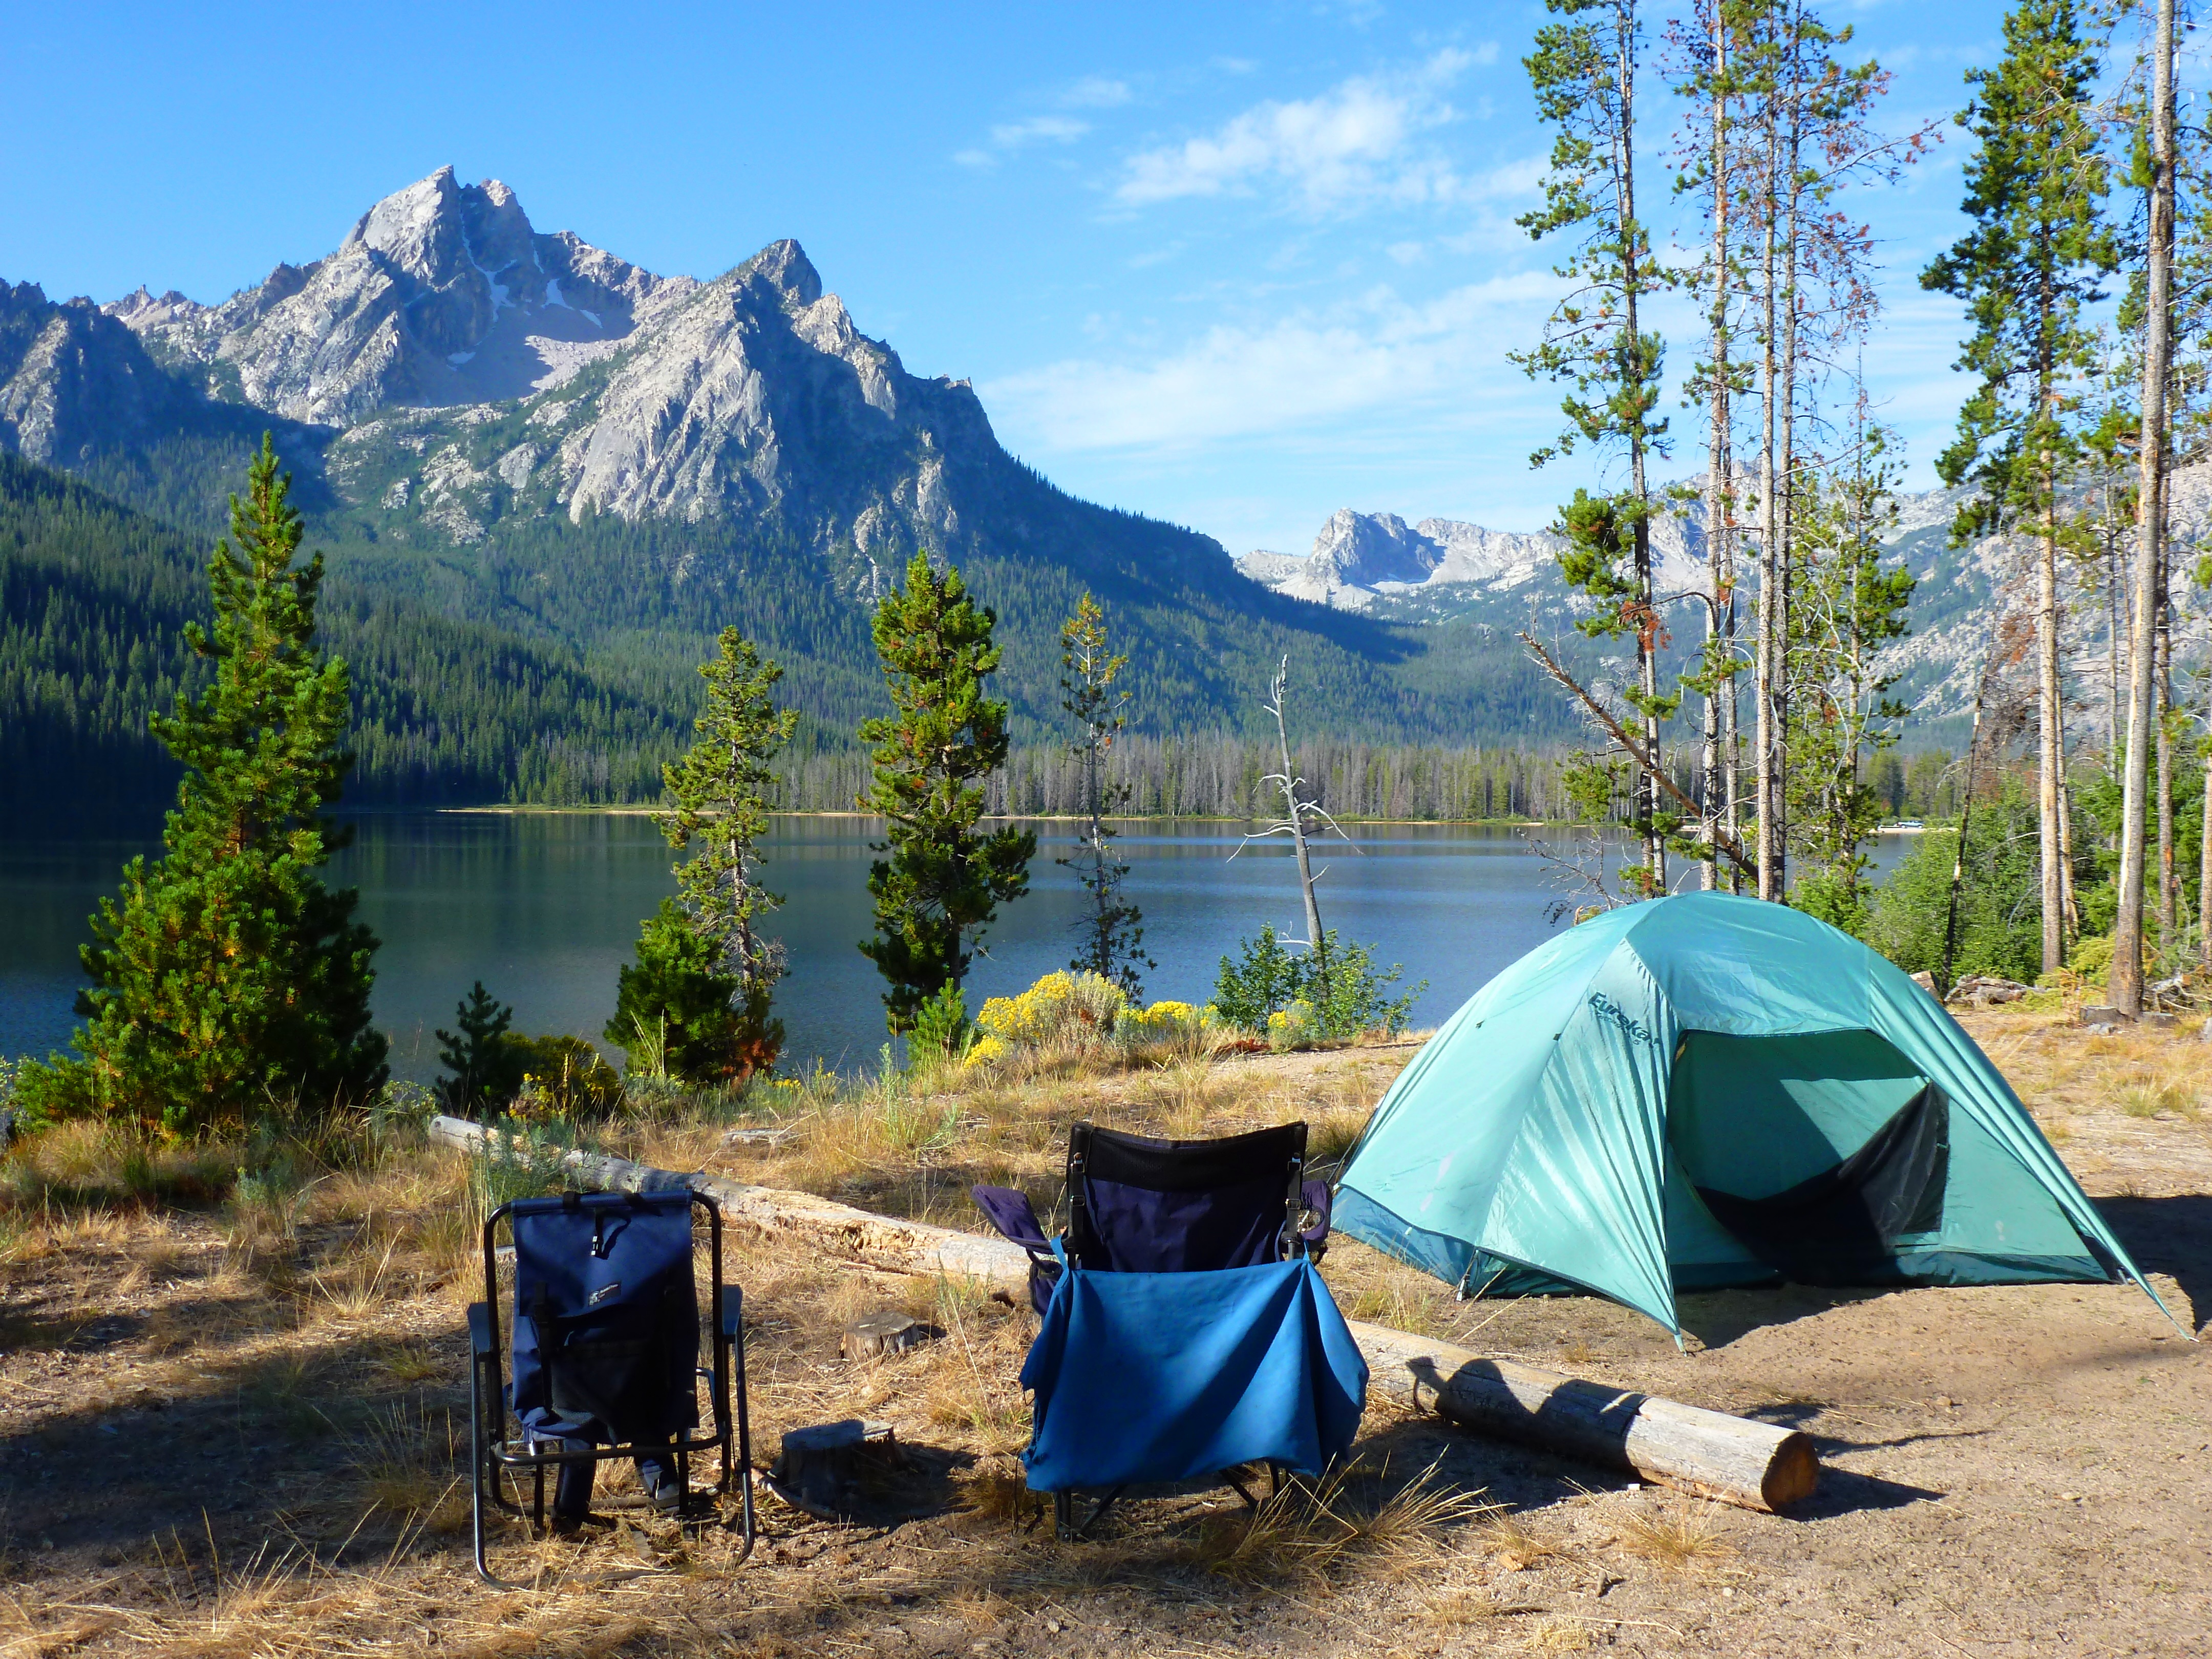 Camping explore. Кемпинг в Карелии. Озеро Рица кемпинг у озера. Поход с палатками. Мультинские озера палатки.